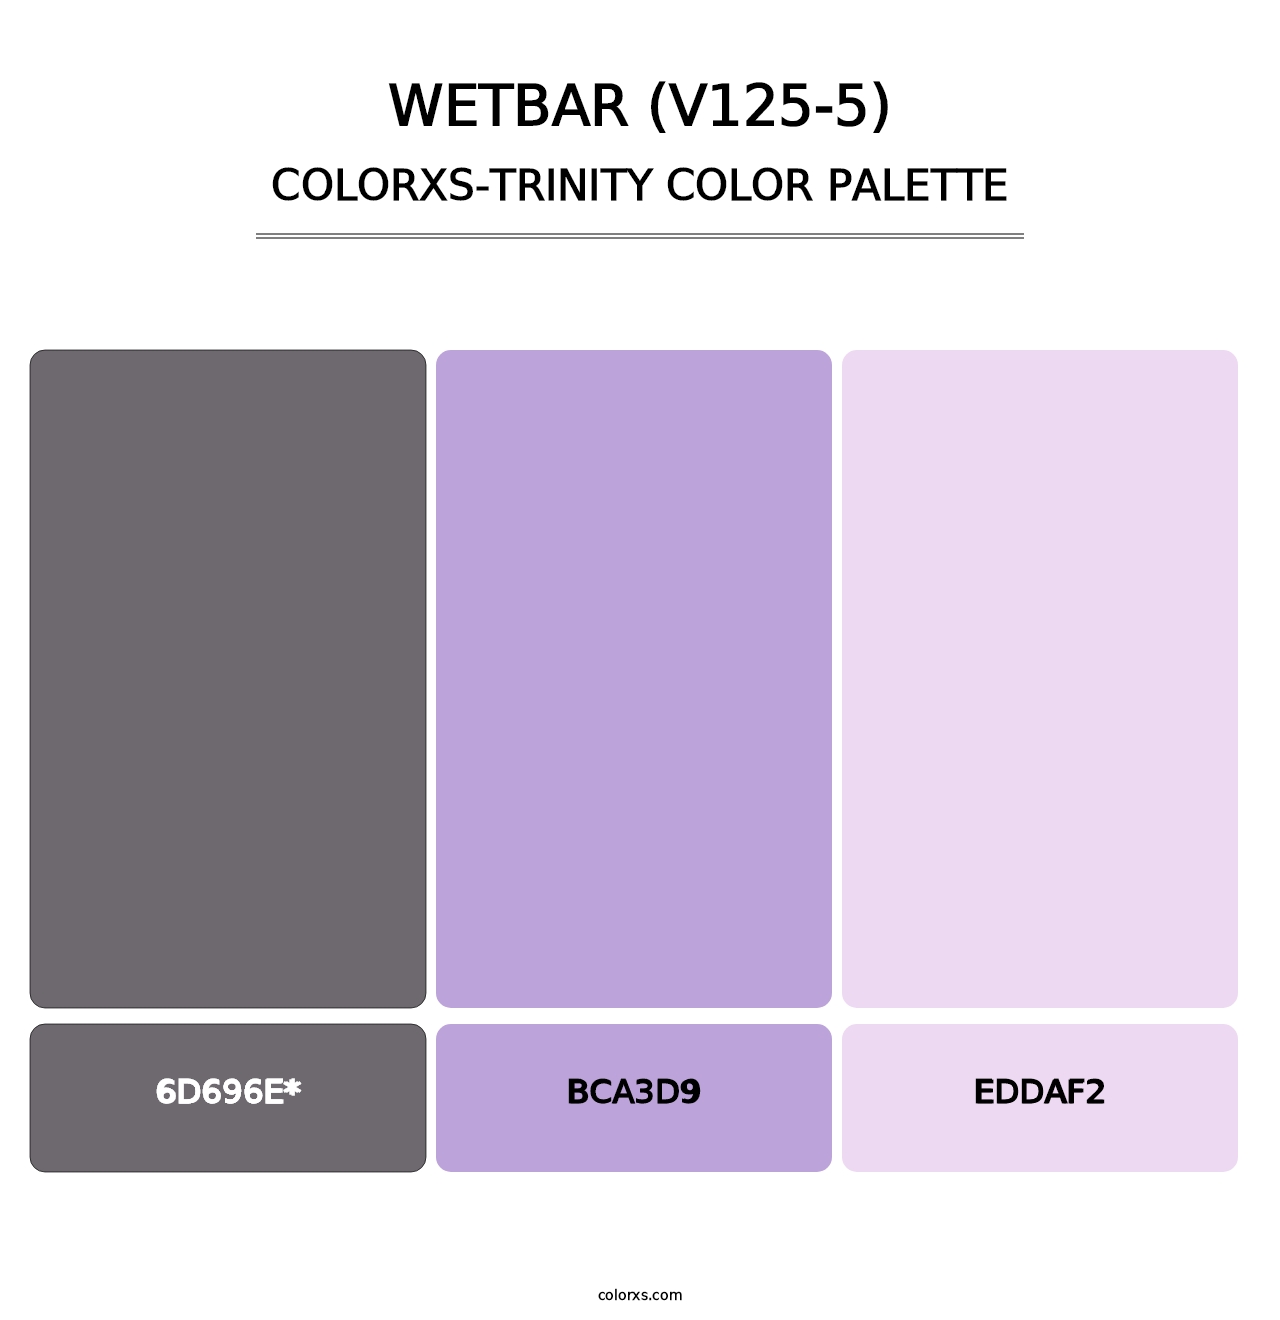 Wetbar (V125-5) - Colorxs Trinity Palette